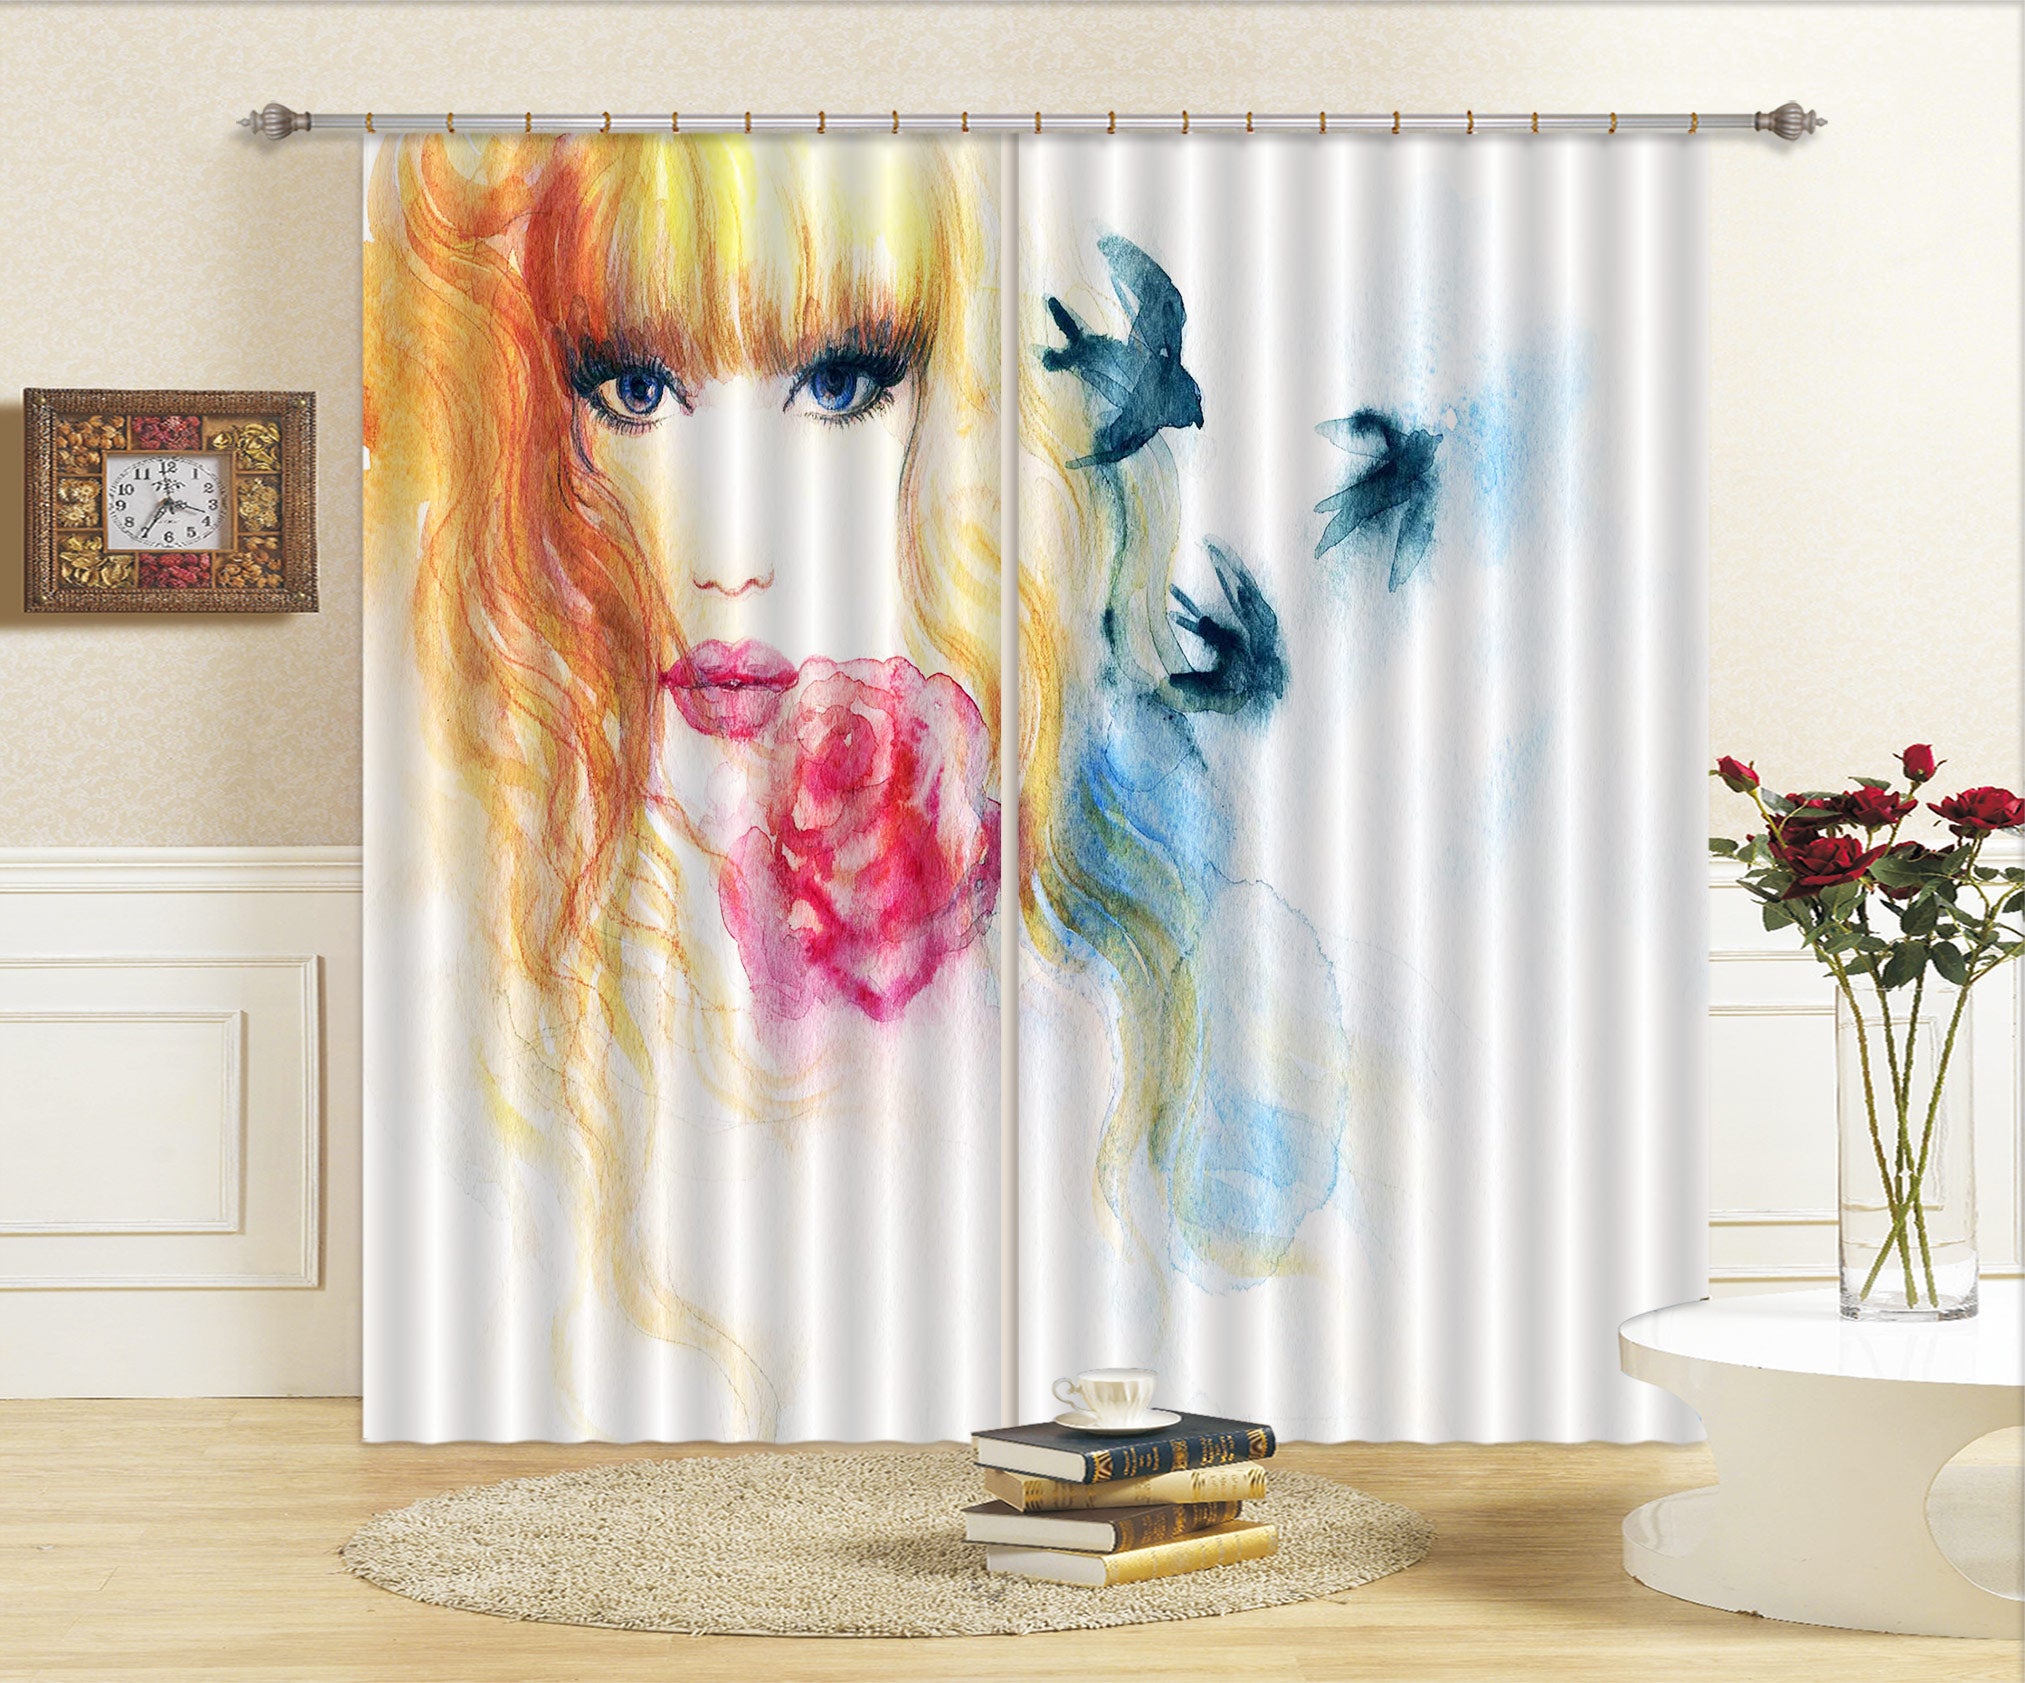 3D Rose Woman 010 Curtains Drapes